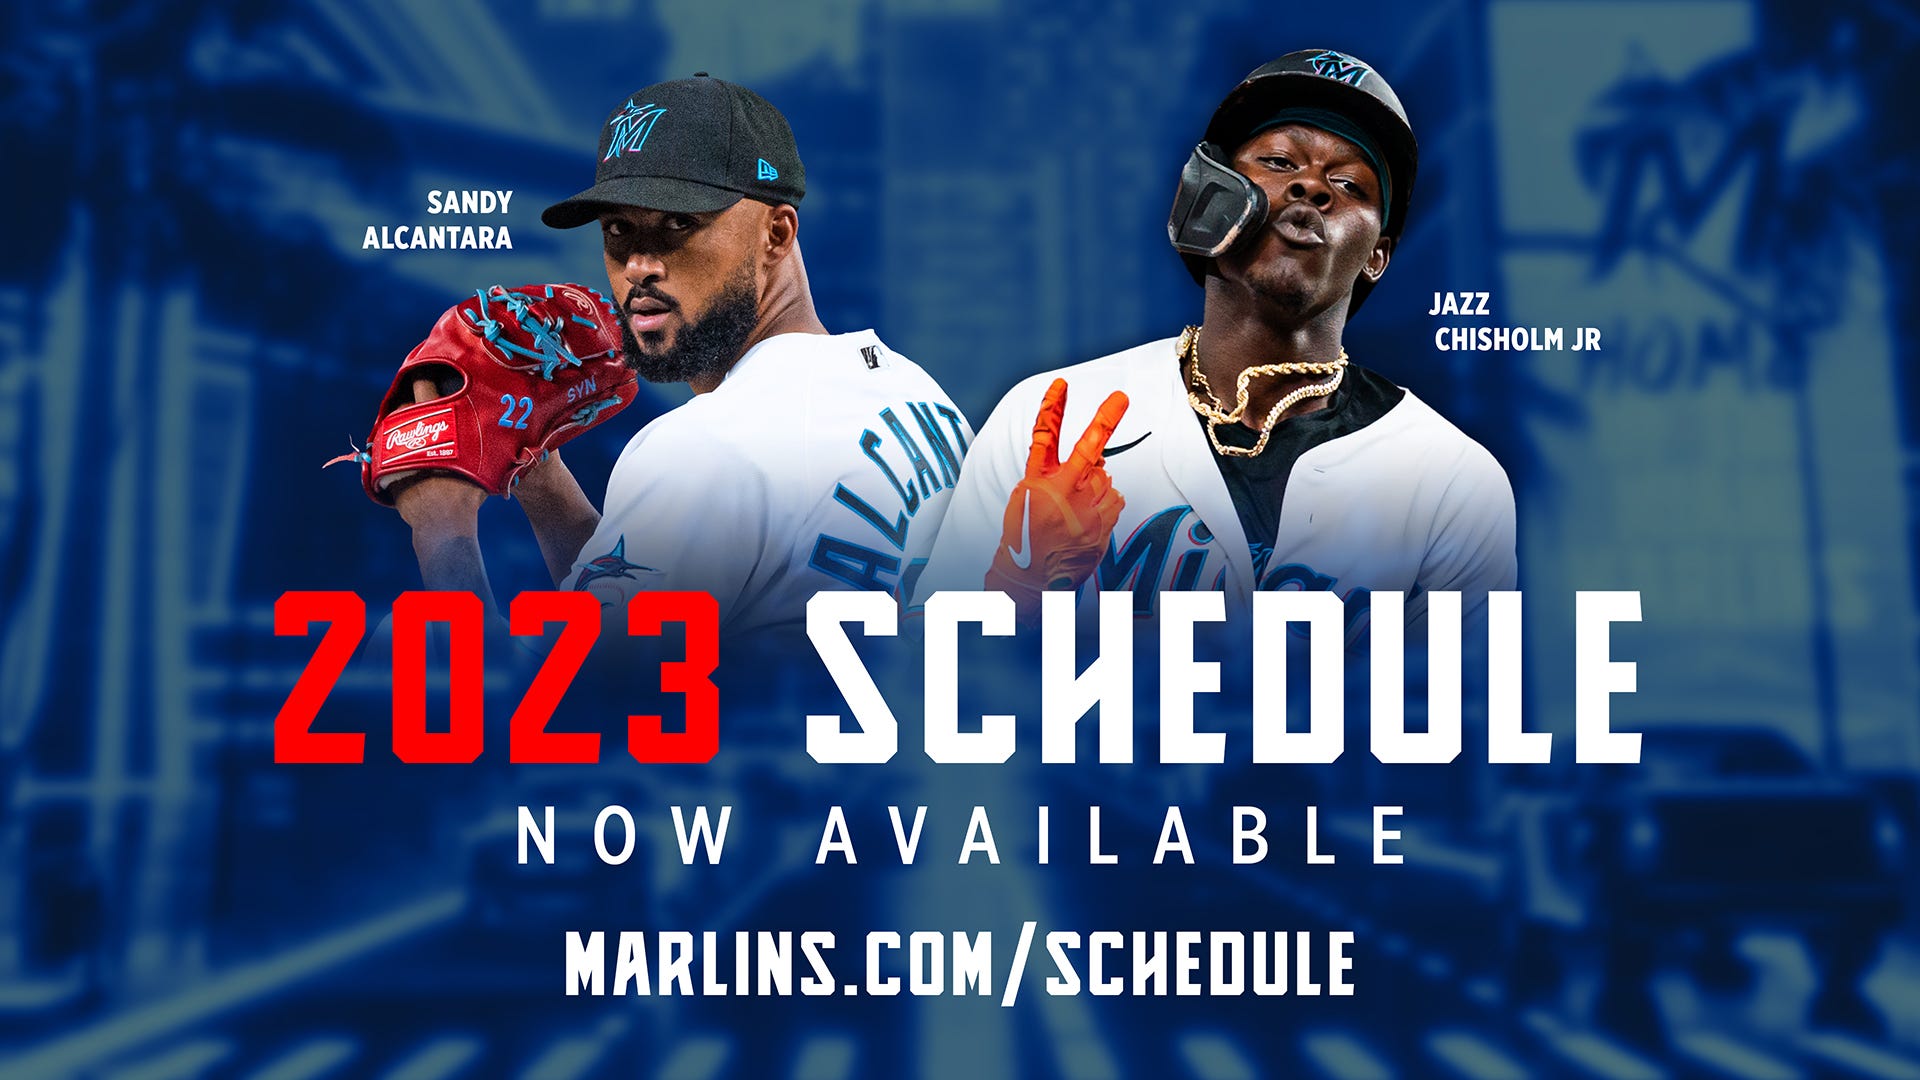 Royals, MLB unveil historic 2023 schedule